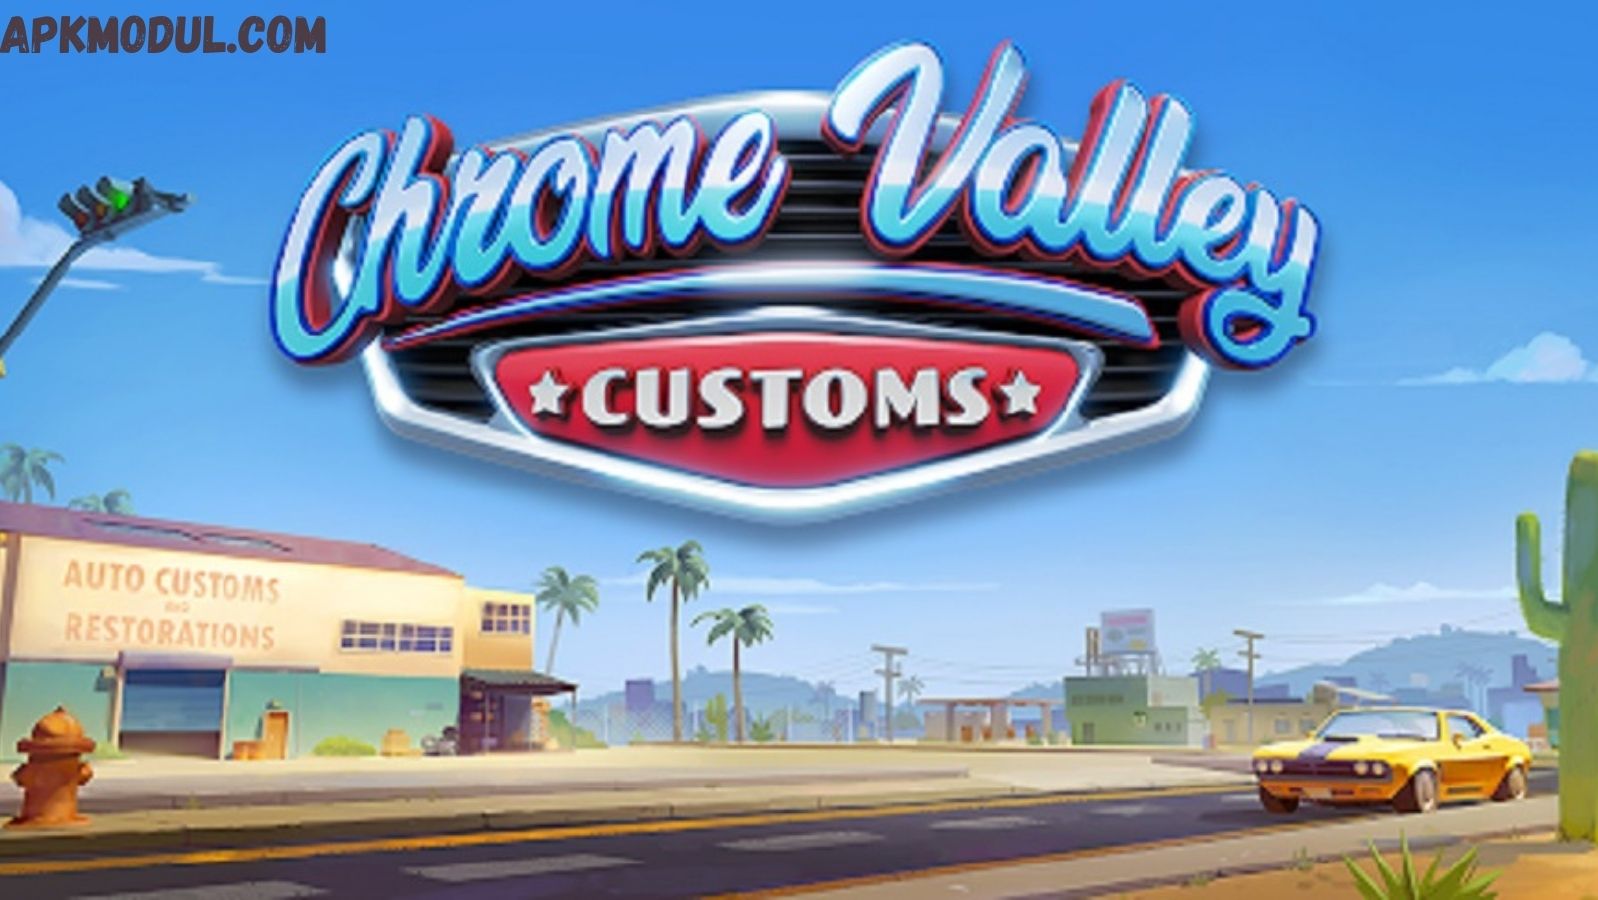 Chrome Valley Customs Apk